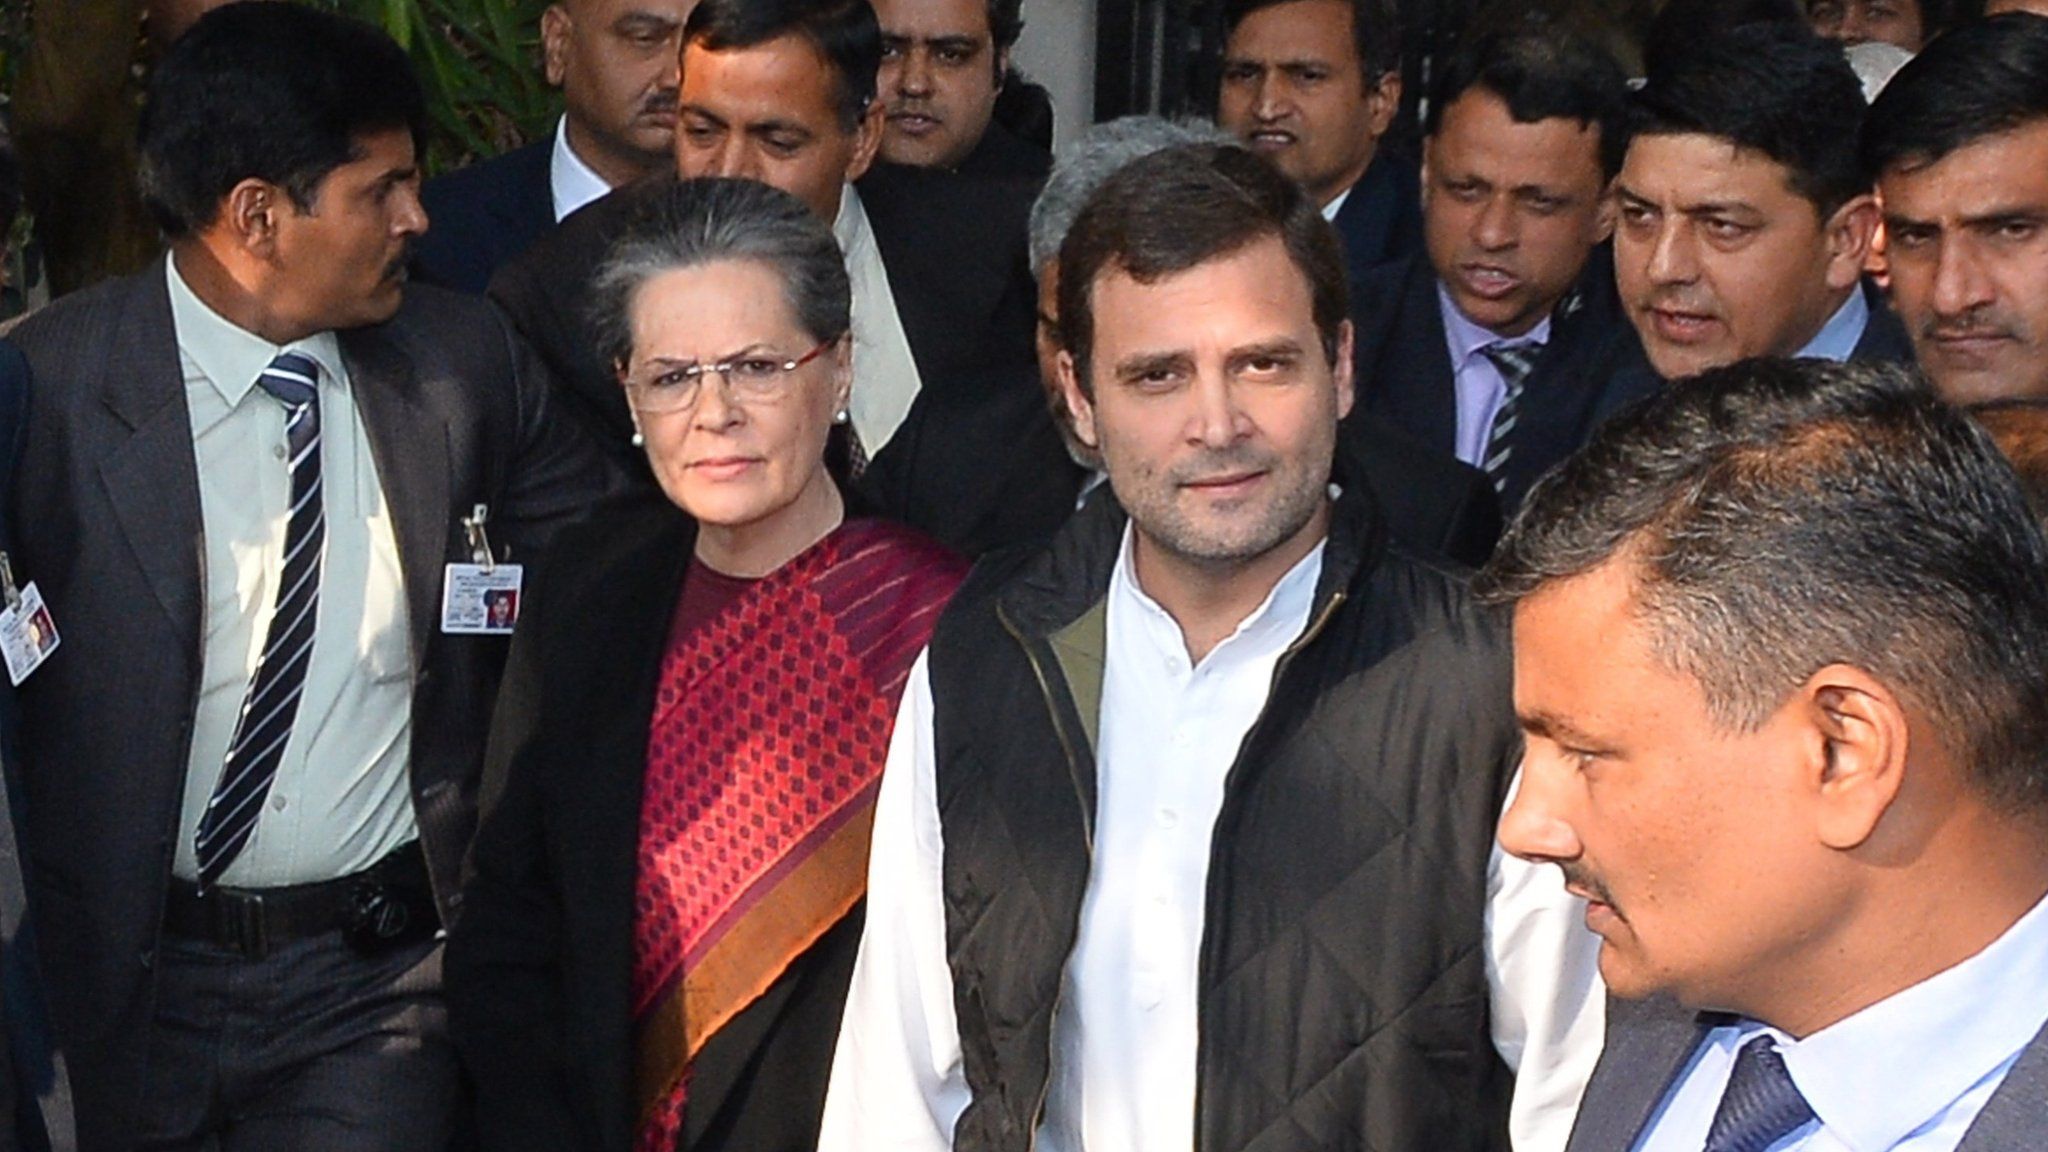 Sonia and Rahul Gandhi arrive at court in Delhi, 19 Dec